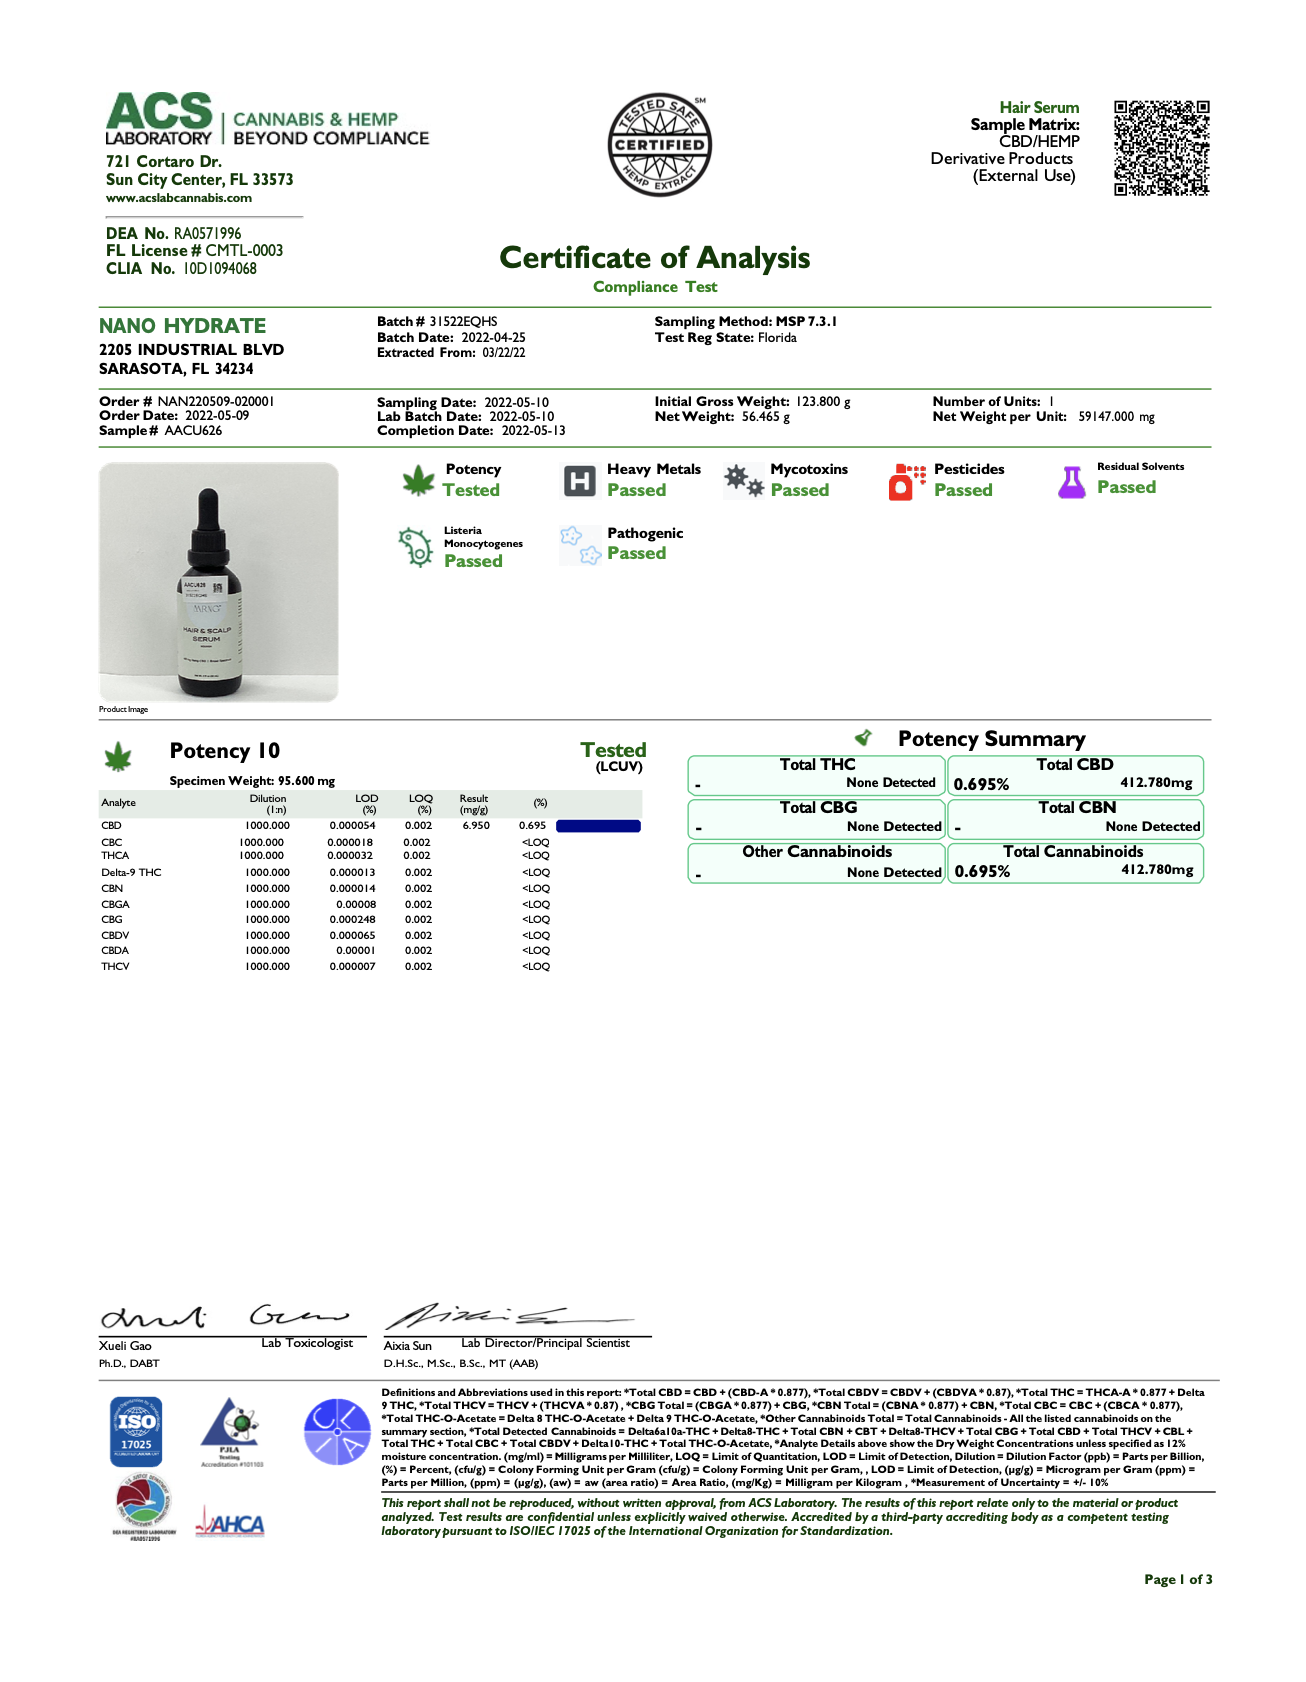 Certificate of Analysis for MRNG LLC Hair and Scalp Serum THC free Hemp CBD Cosmetic Wellness Product